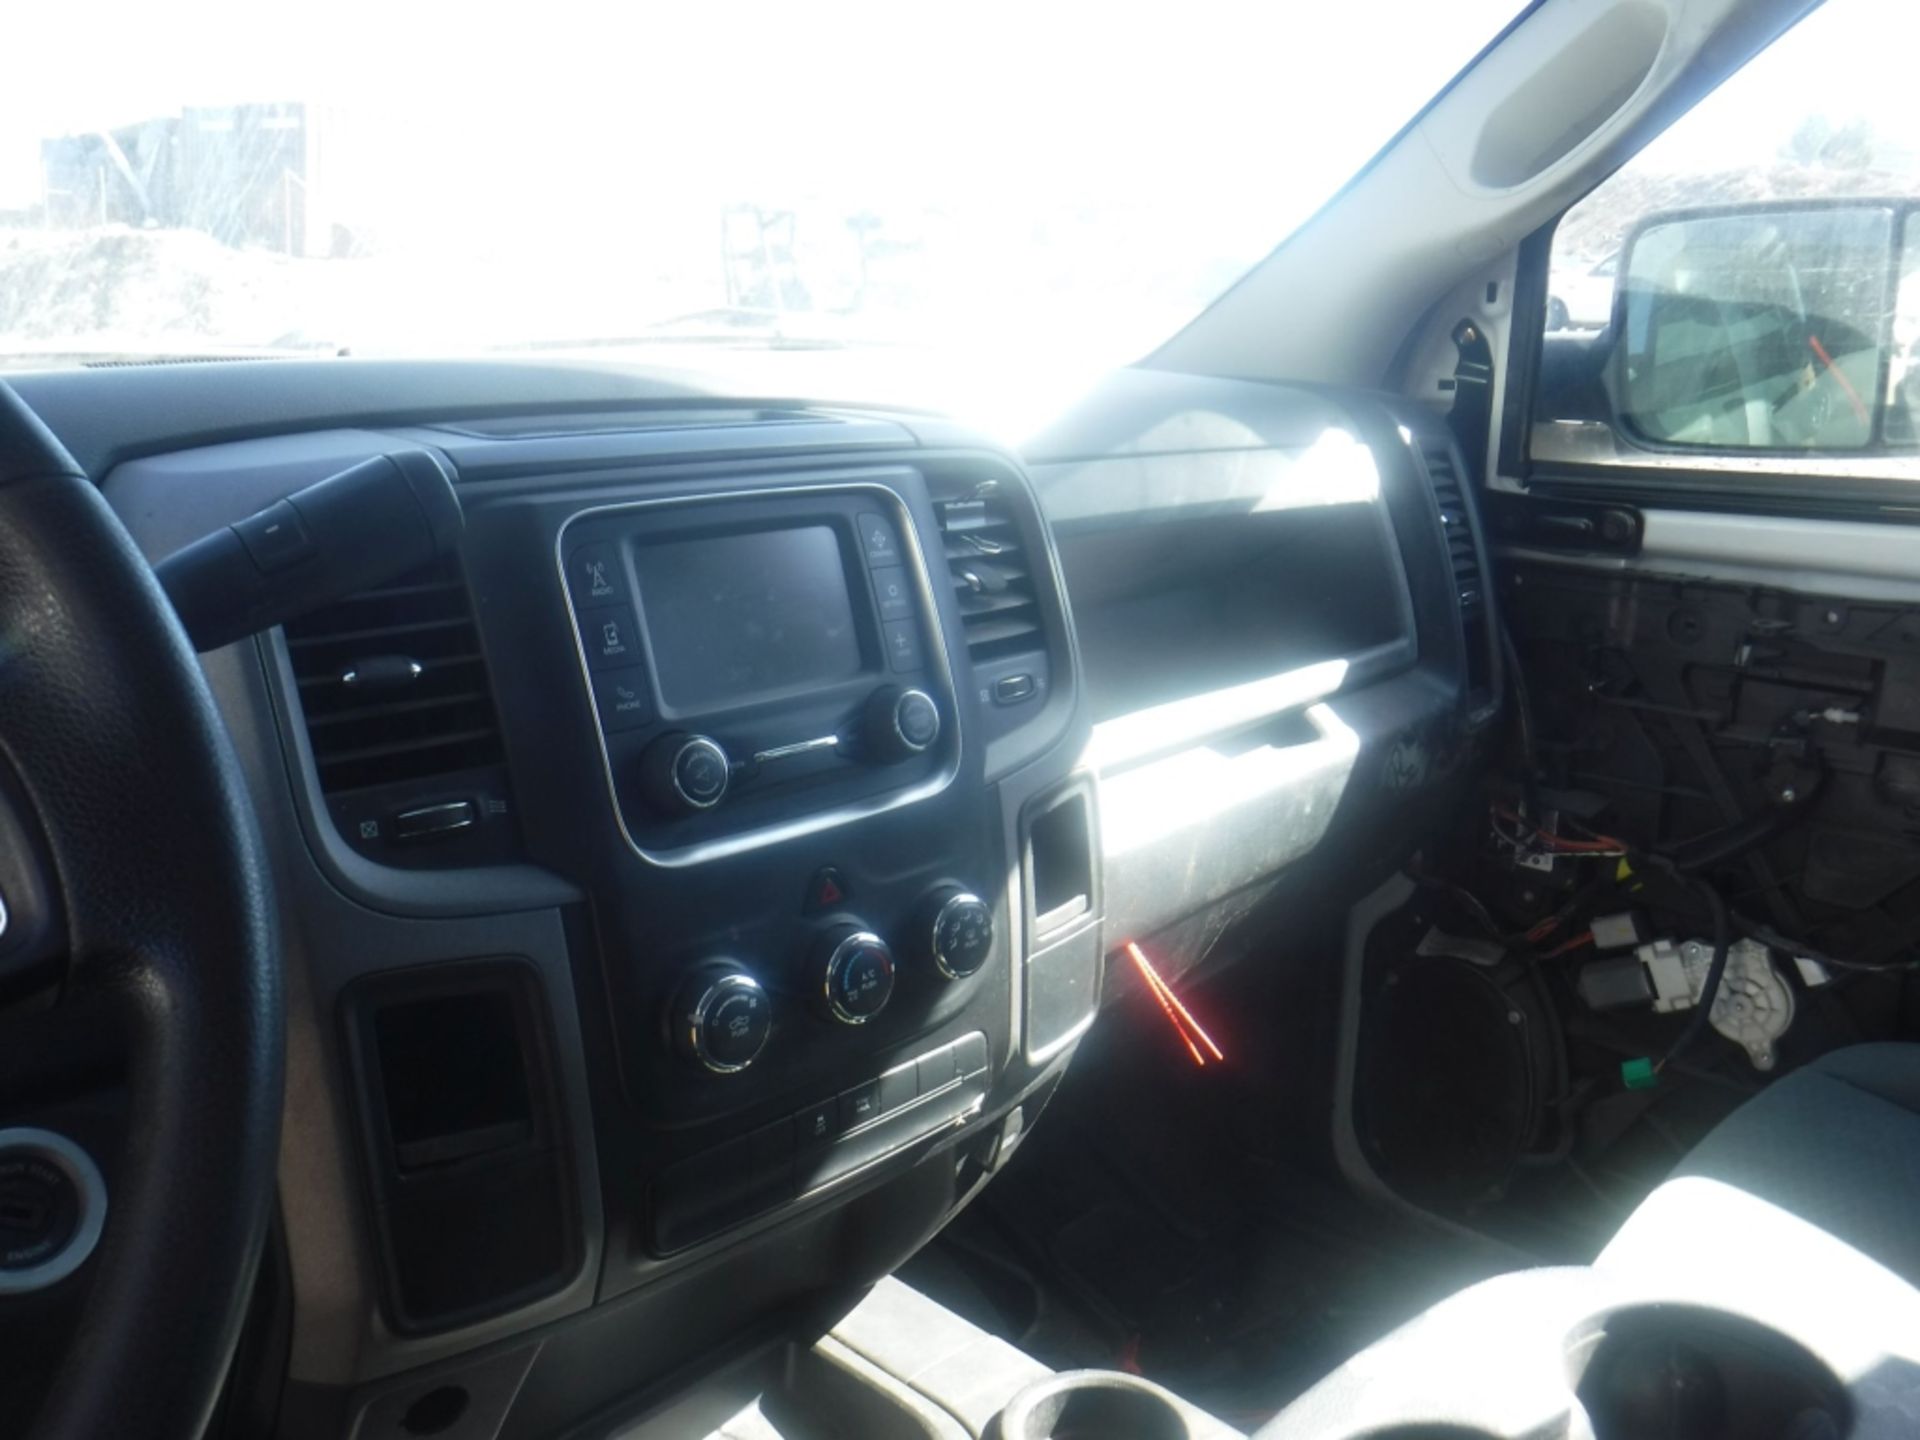 2016 Dodge RAM 2500 Crew Cab Pickup, - Image 27 of 64